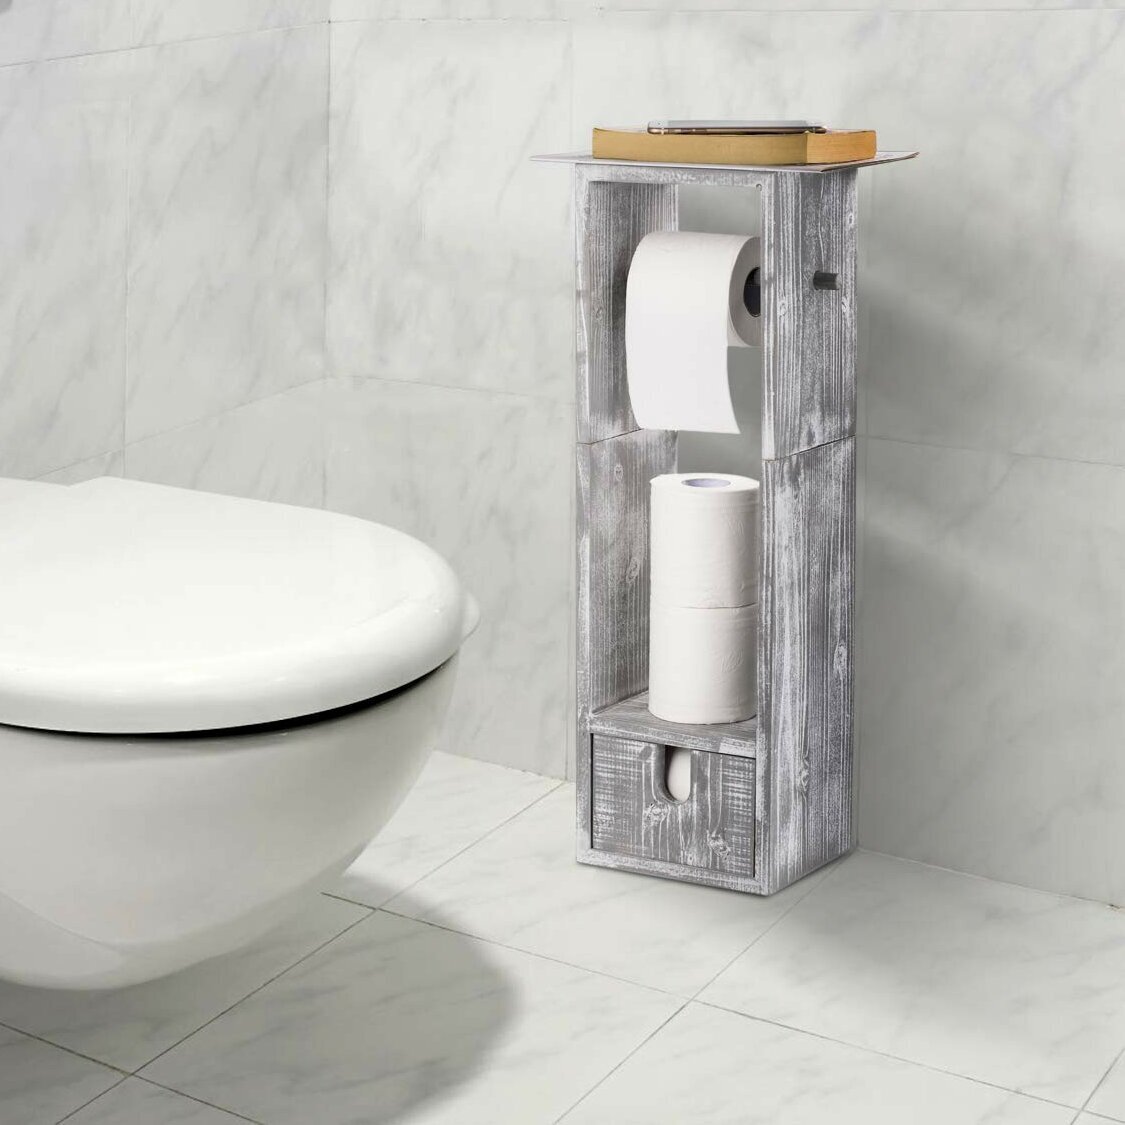 Rustic Unique Toilet Paper Holder Free Standing